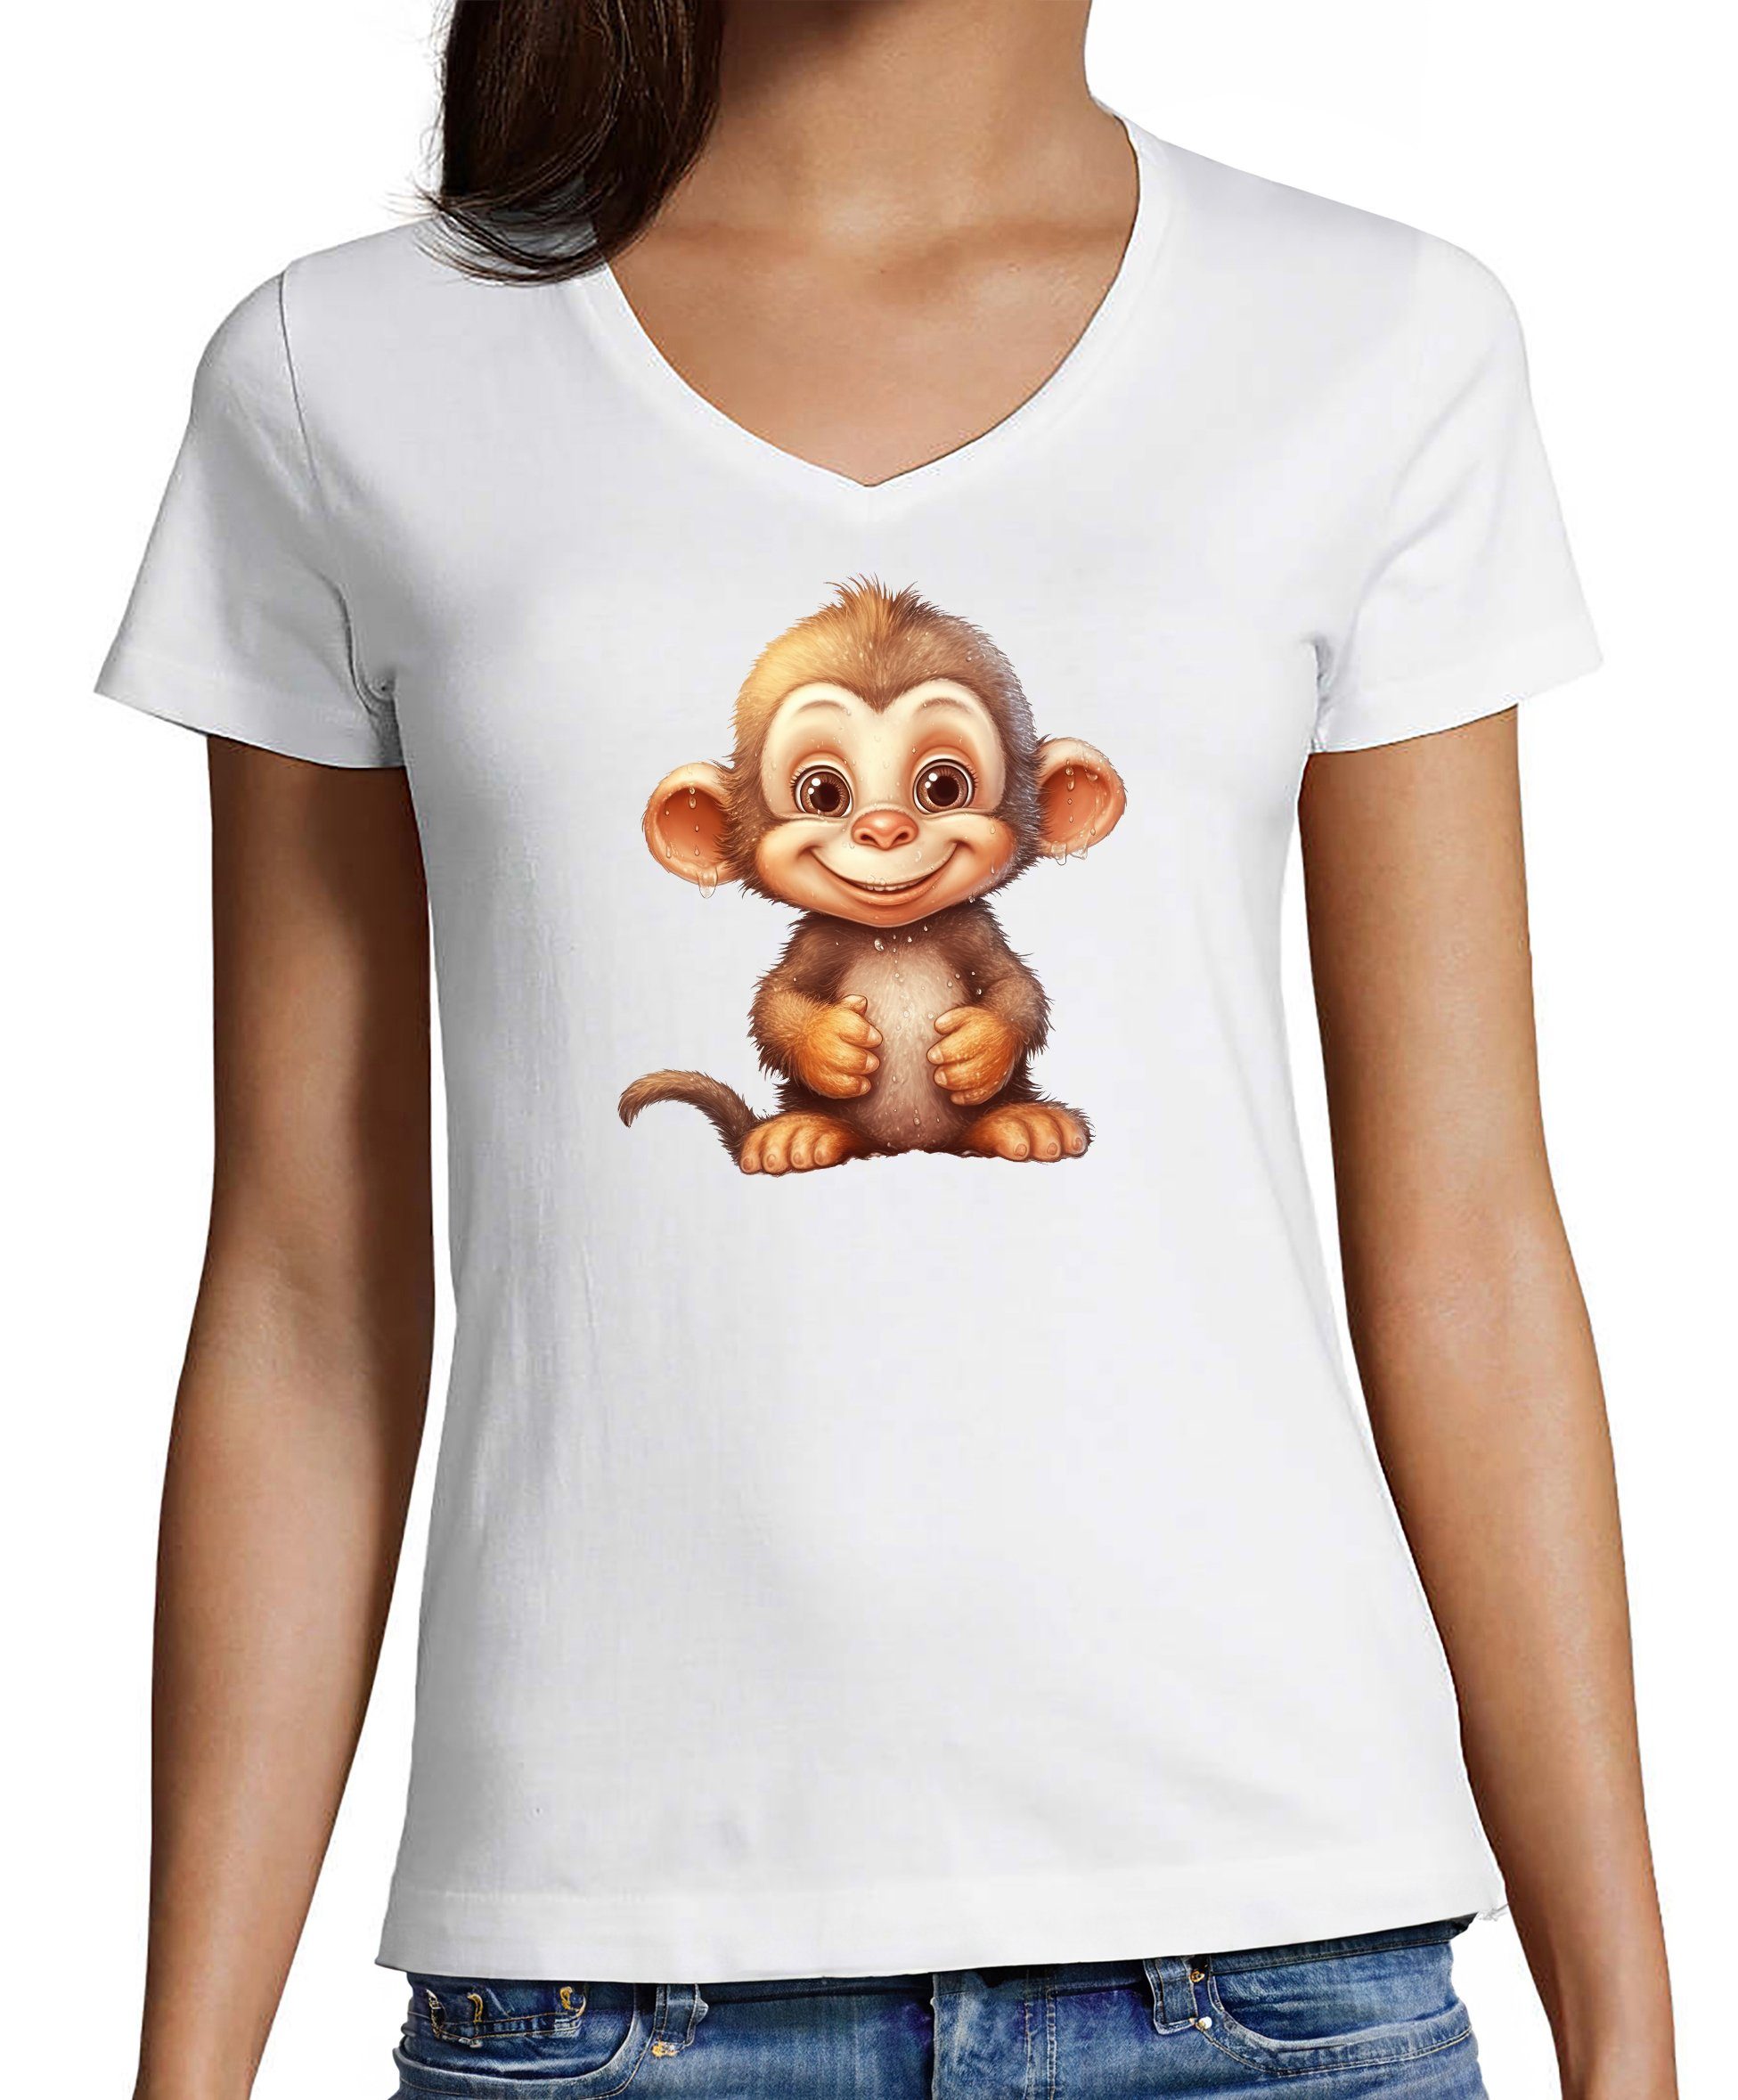 MyDesign24 T-Shirt Damen Wildtier Print Shirt - Baby Affe Schimpanse V-Ausschnitt Baumwollshirt mit Aufdruck Slim Fit weiss